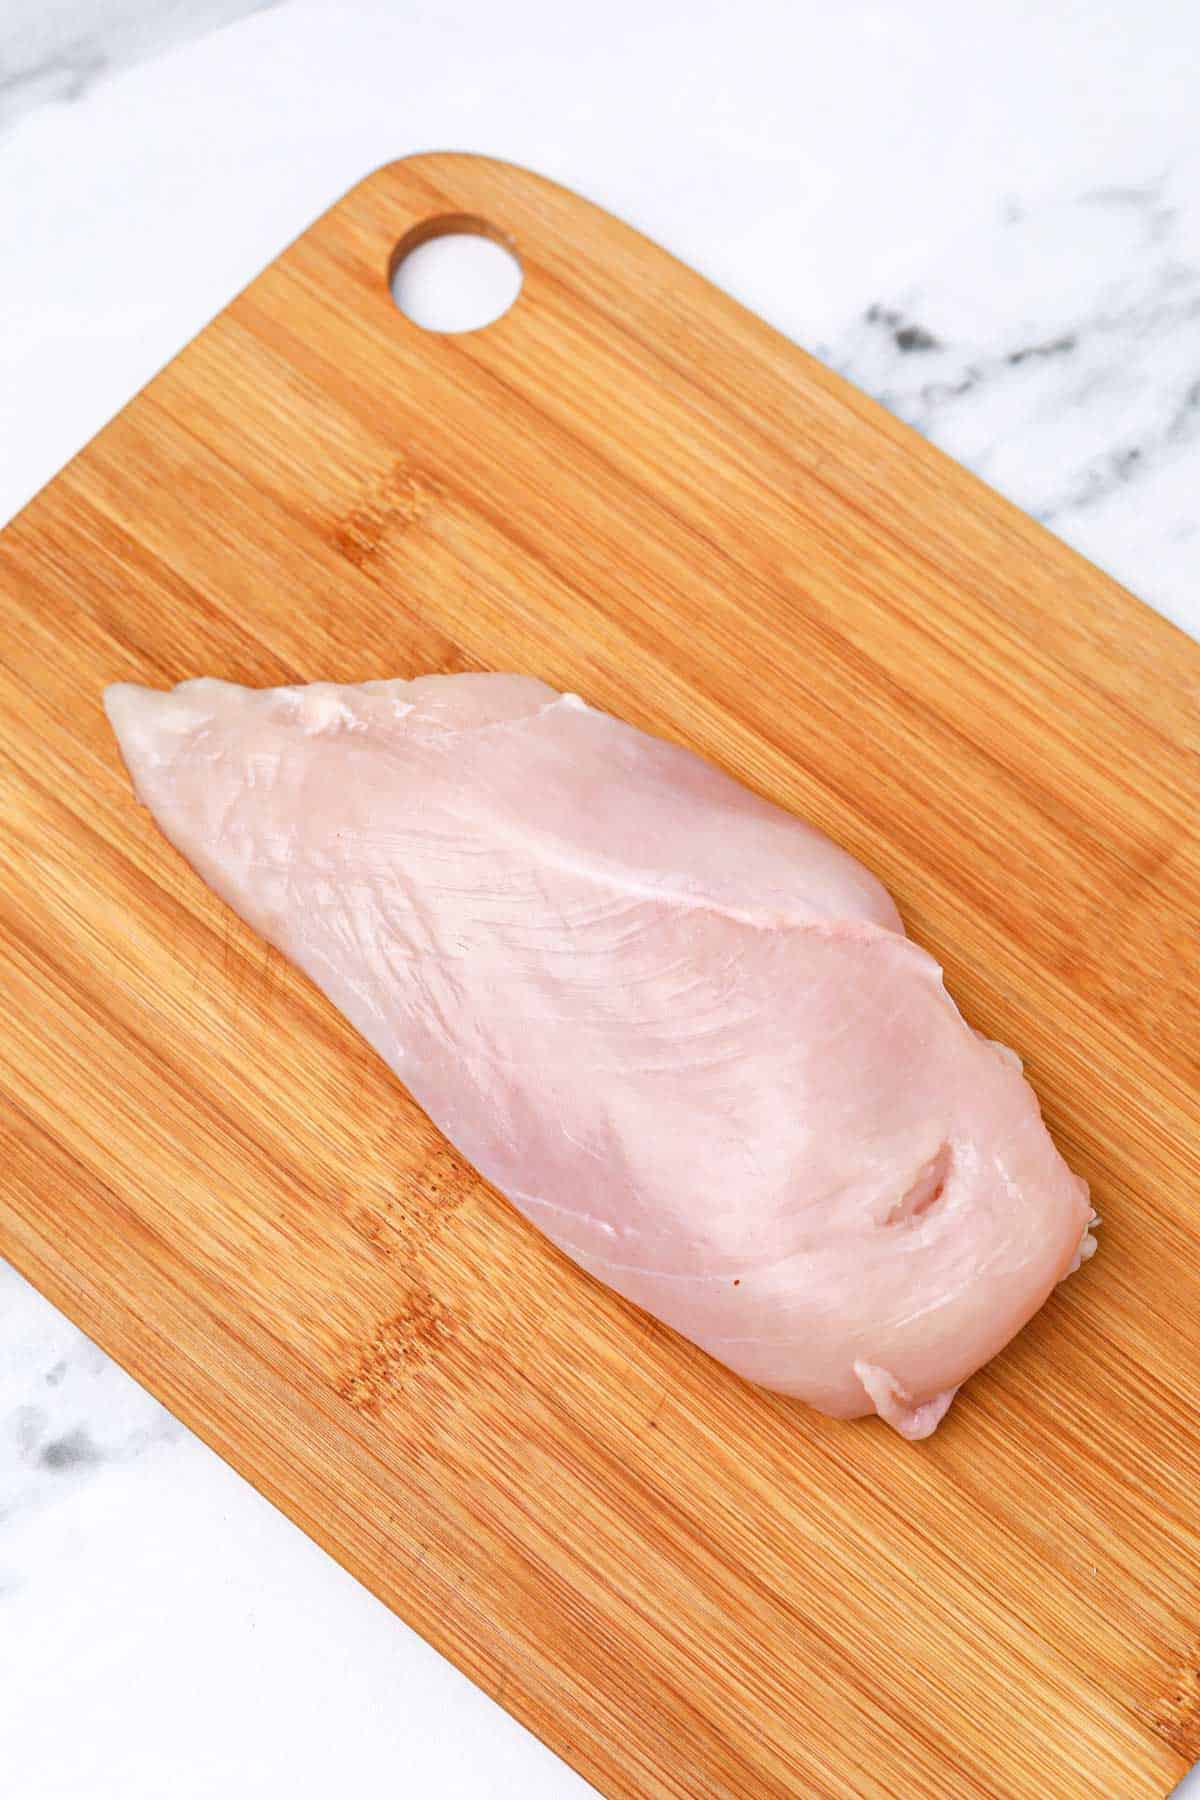 A chicken breast on a cutting board.